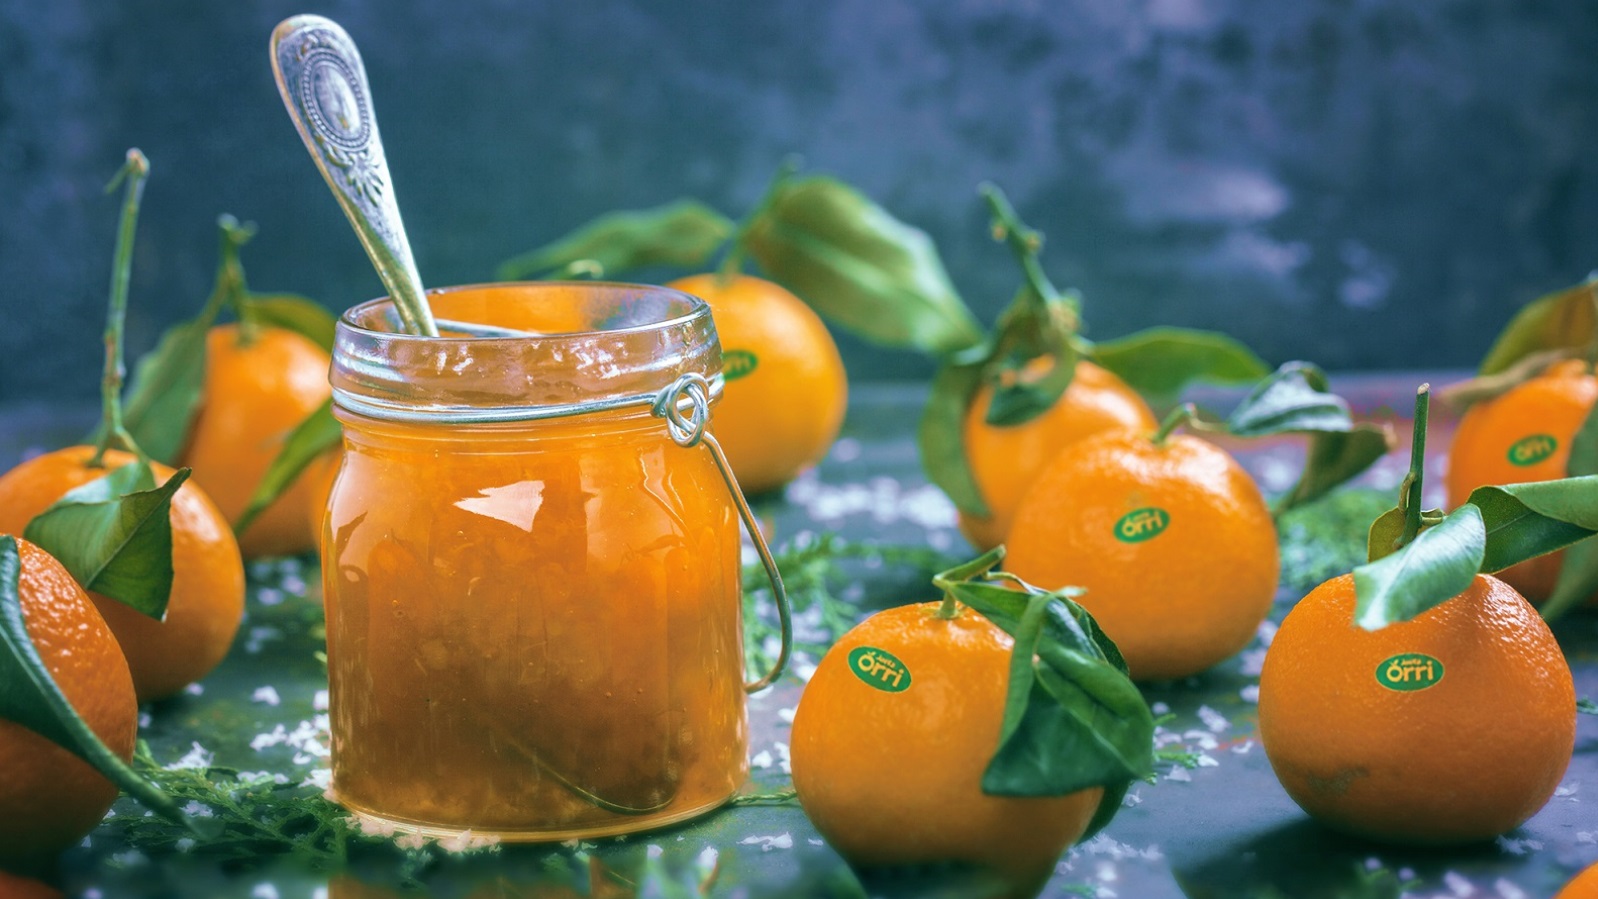 Easy-to-peel Orri Jaffa mandarin oranges. Photo courtesy of the Plant Production and Marketing Board of Israel